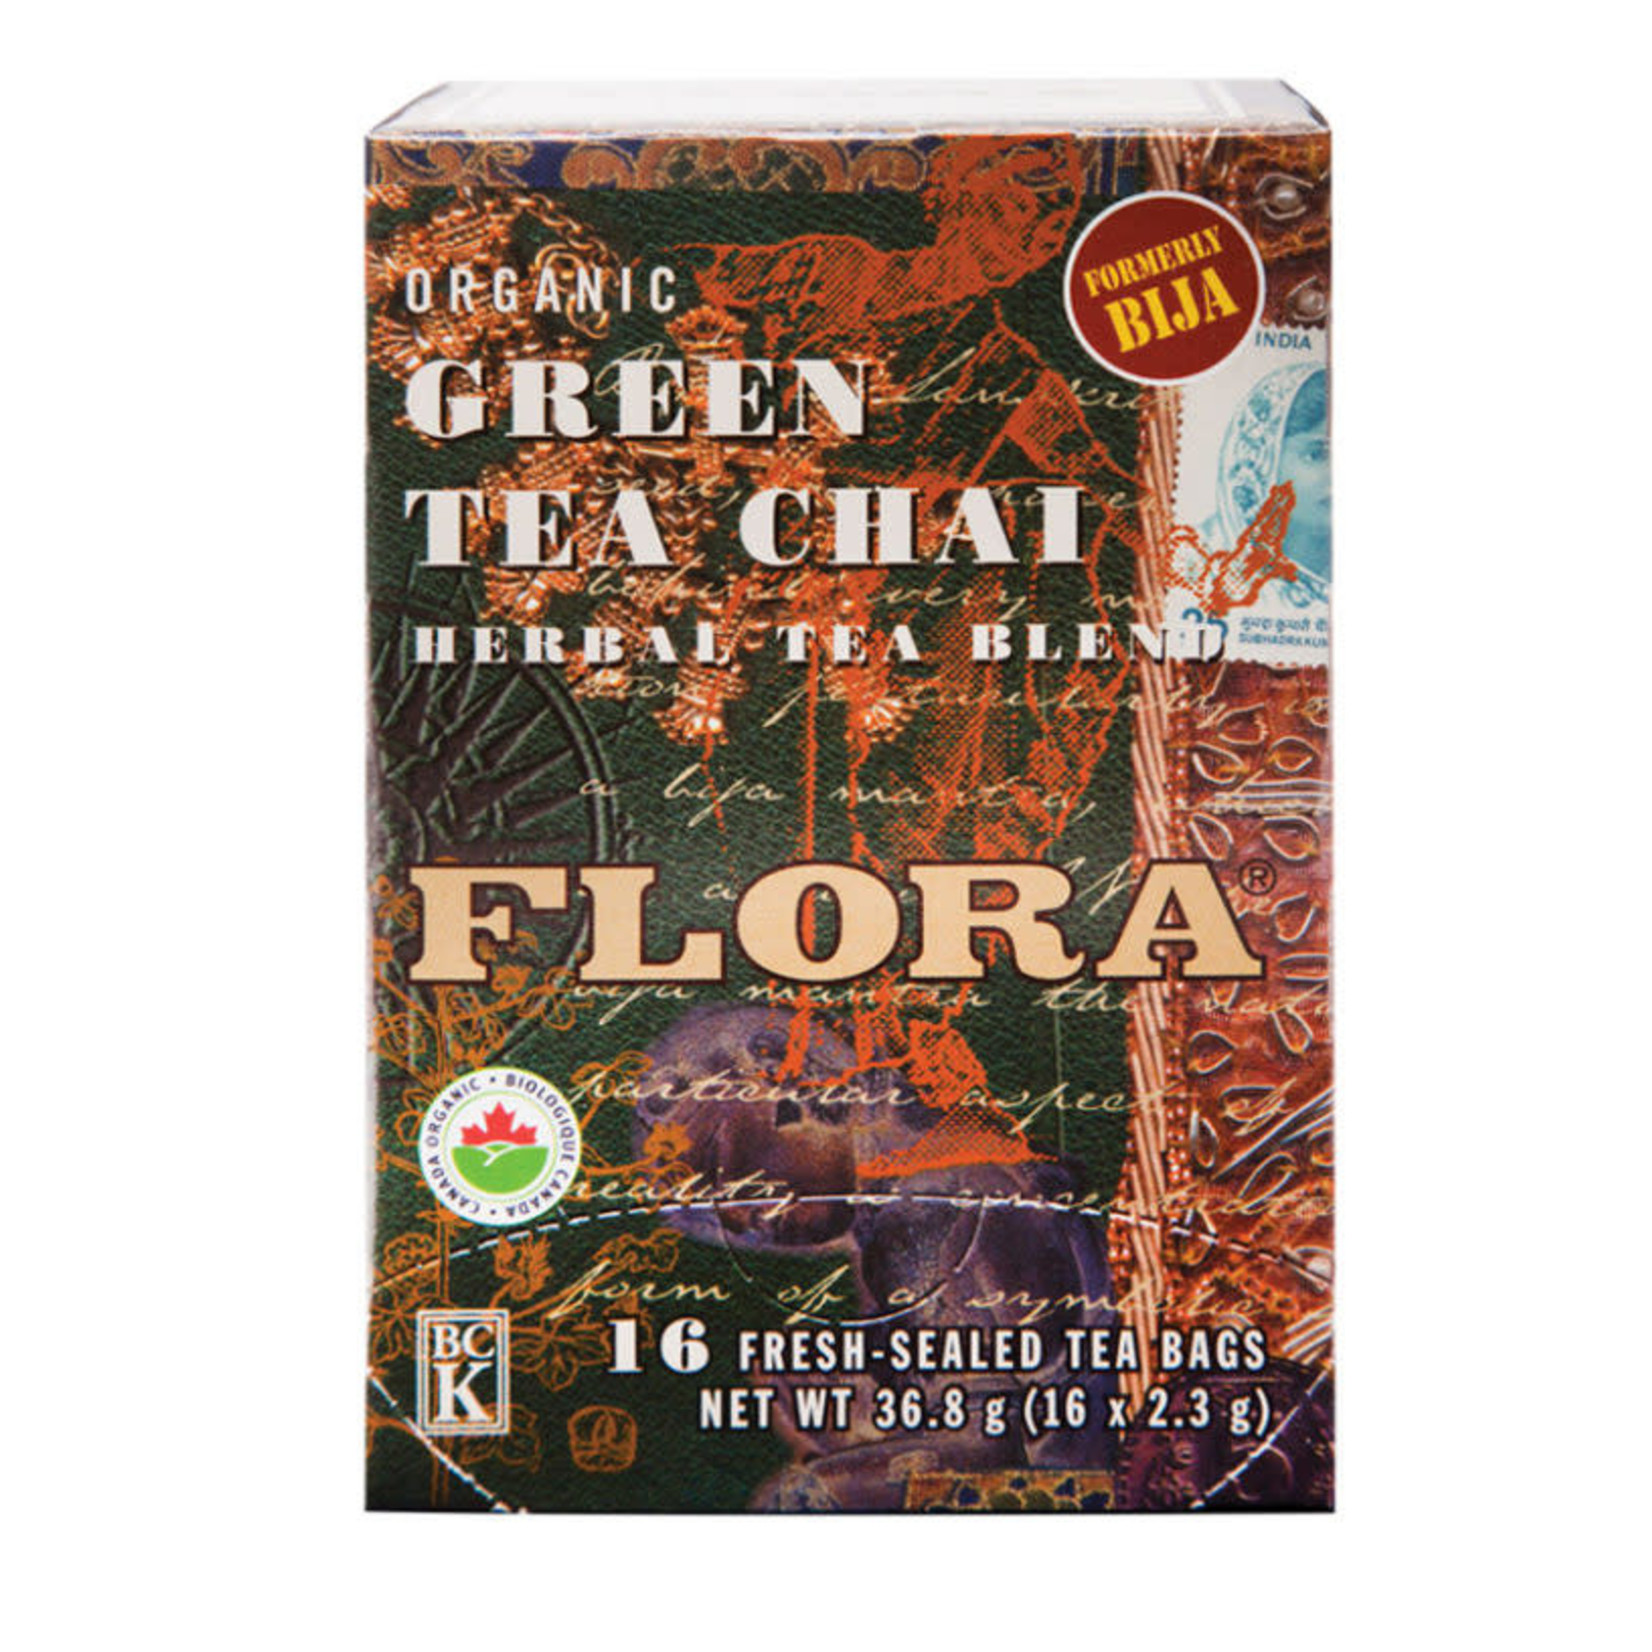 FLORA FLORA ORGANIC GREEN TEA CHAI HERBAL TEA 16 BAGS